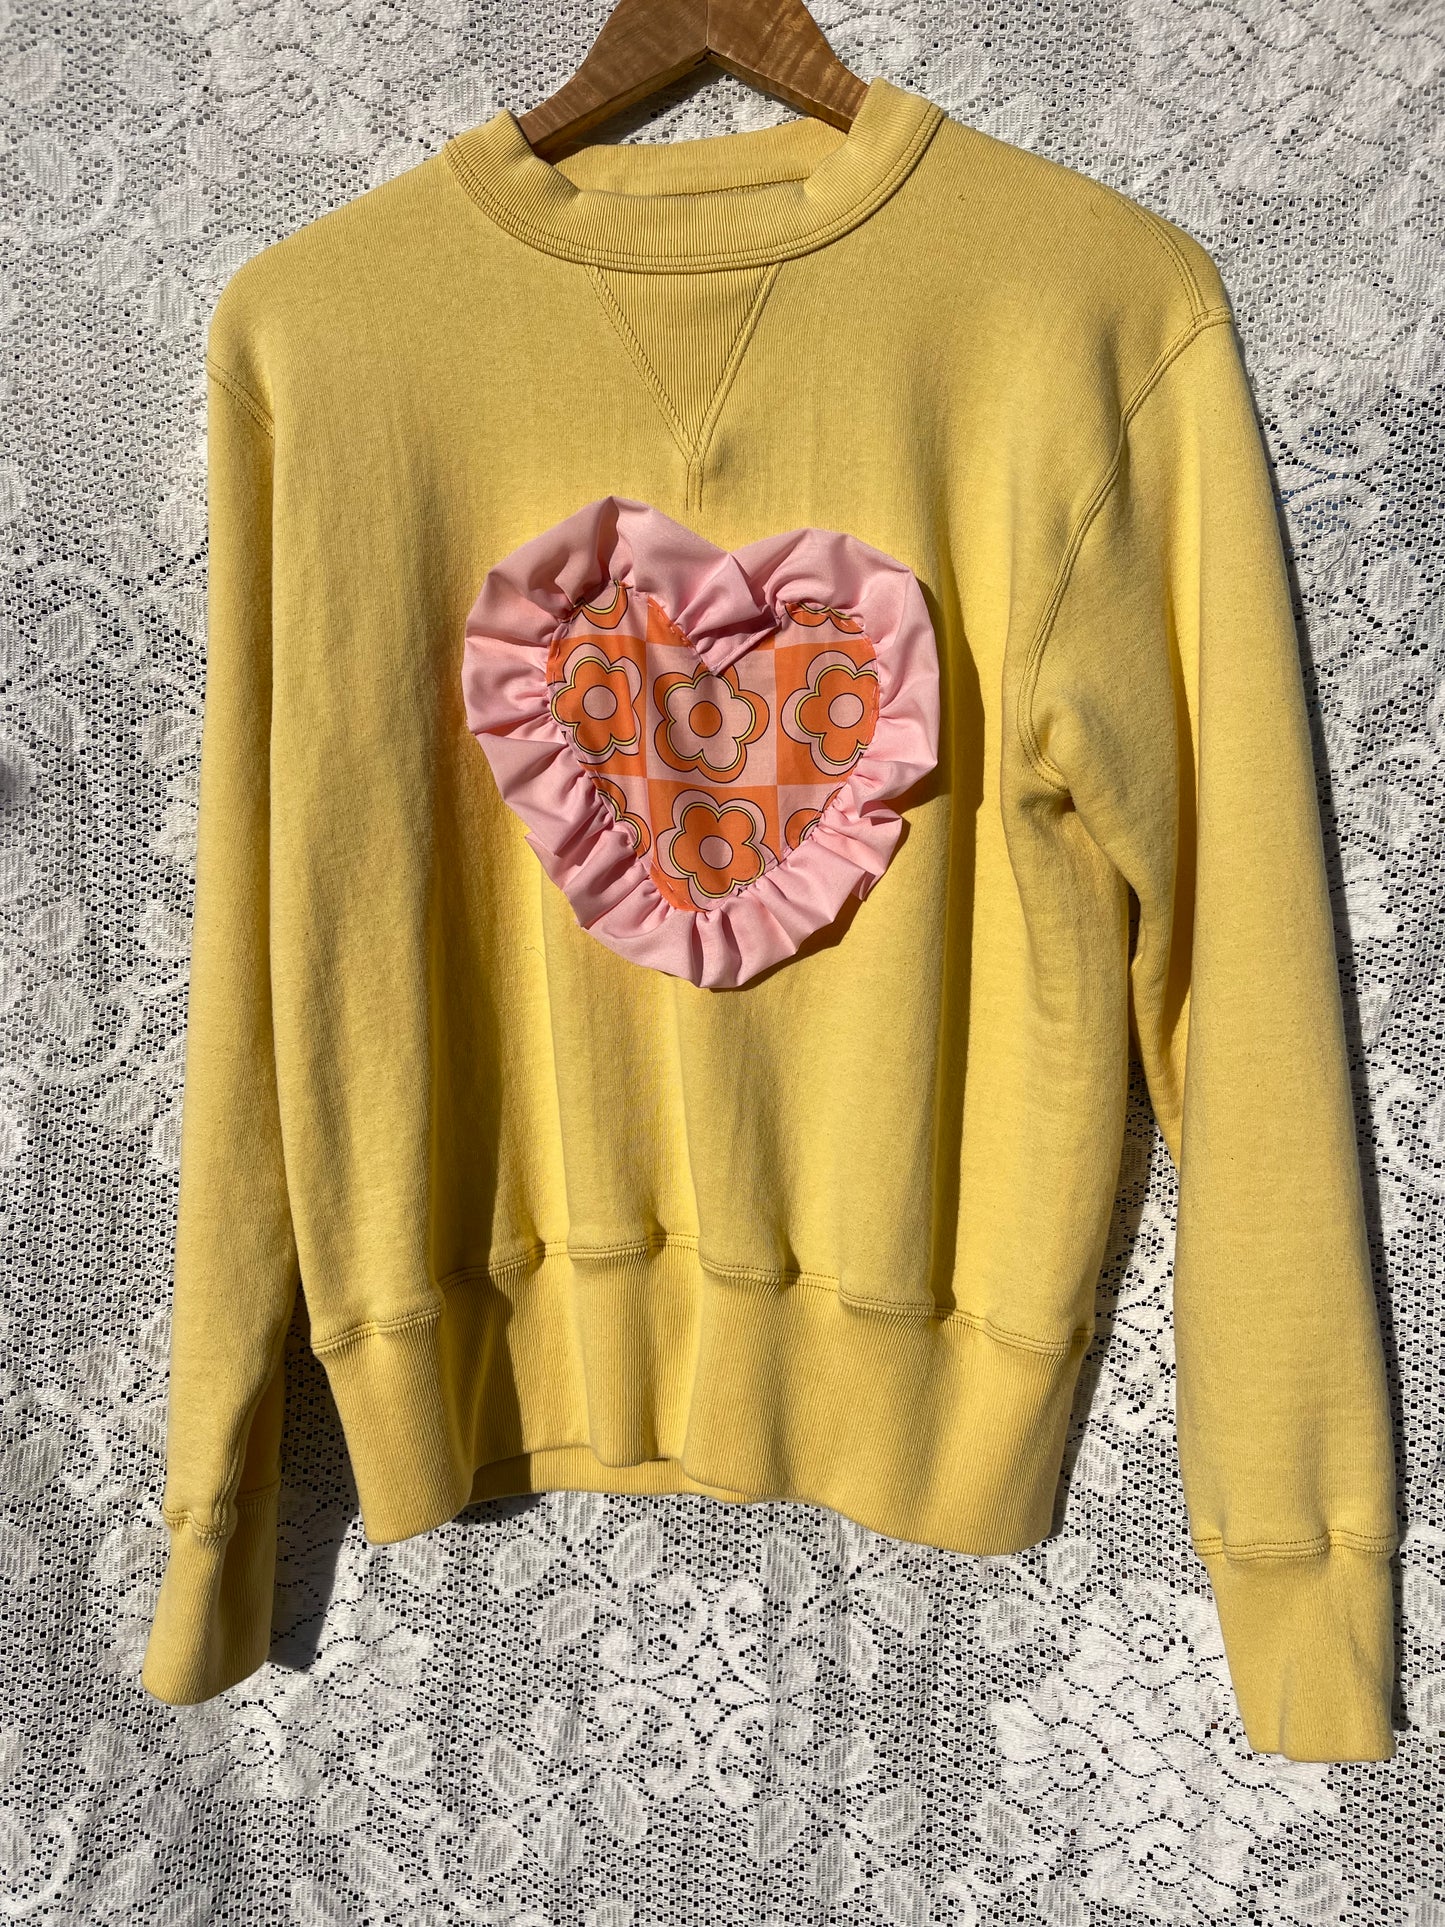 Yellow sweatshirt with ruffled heart